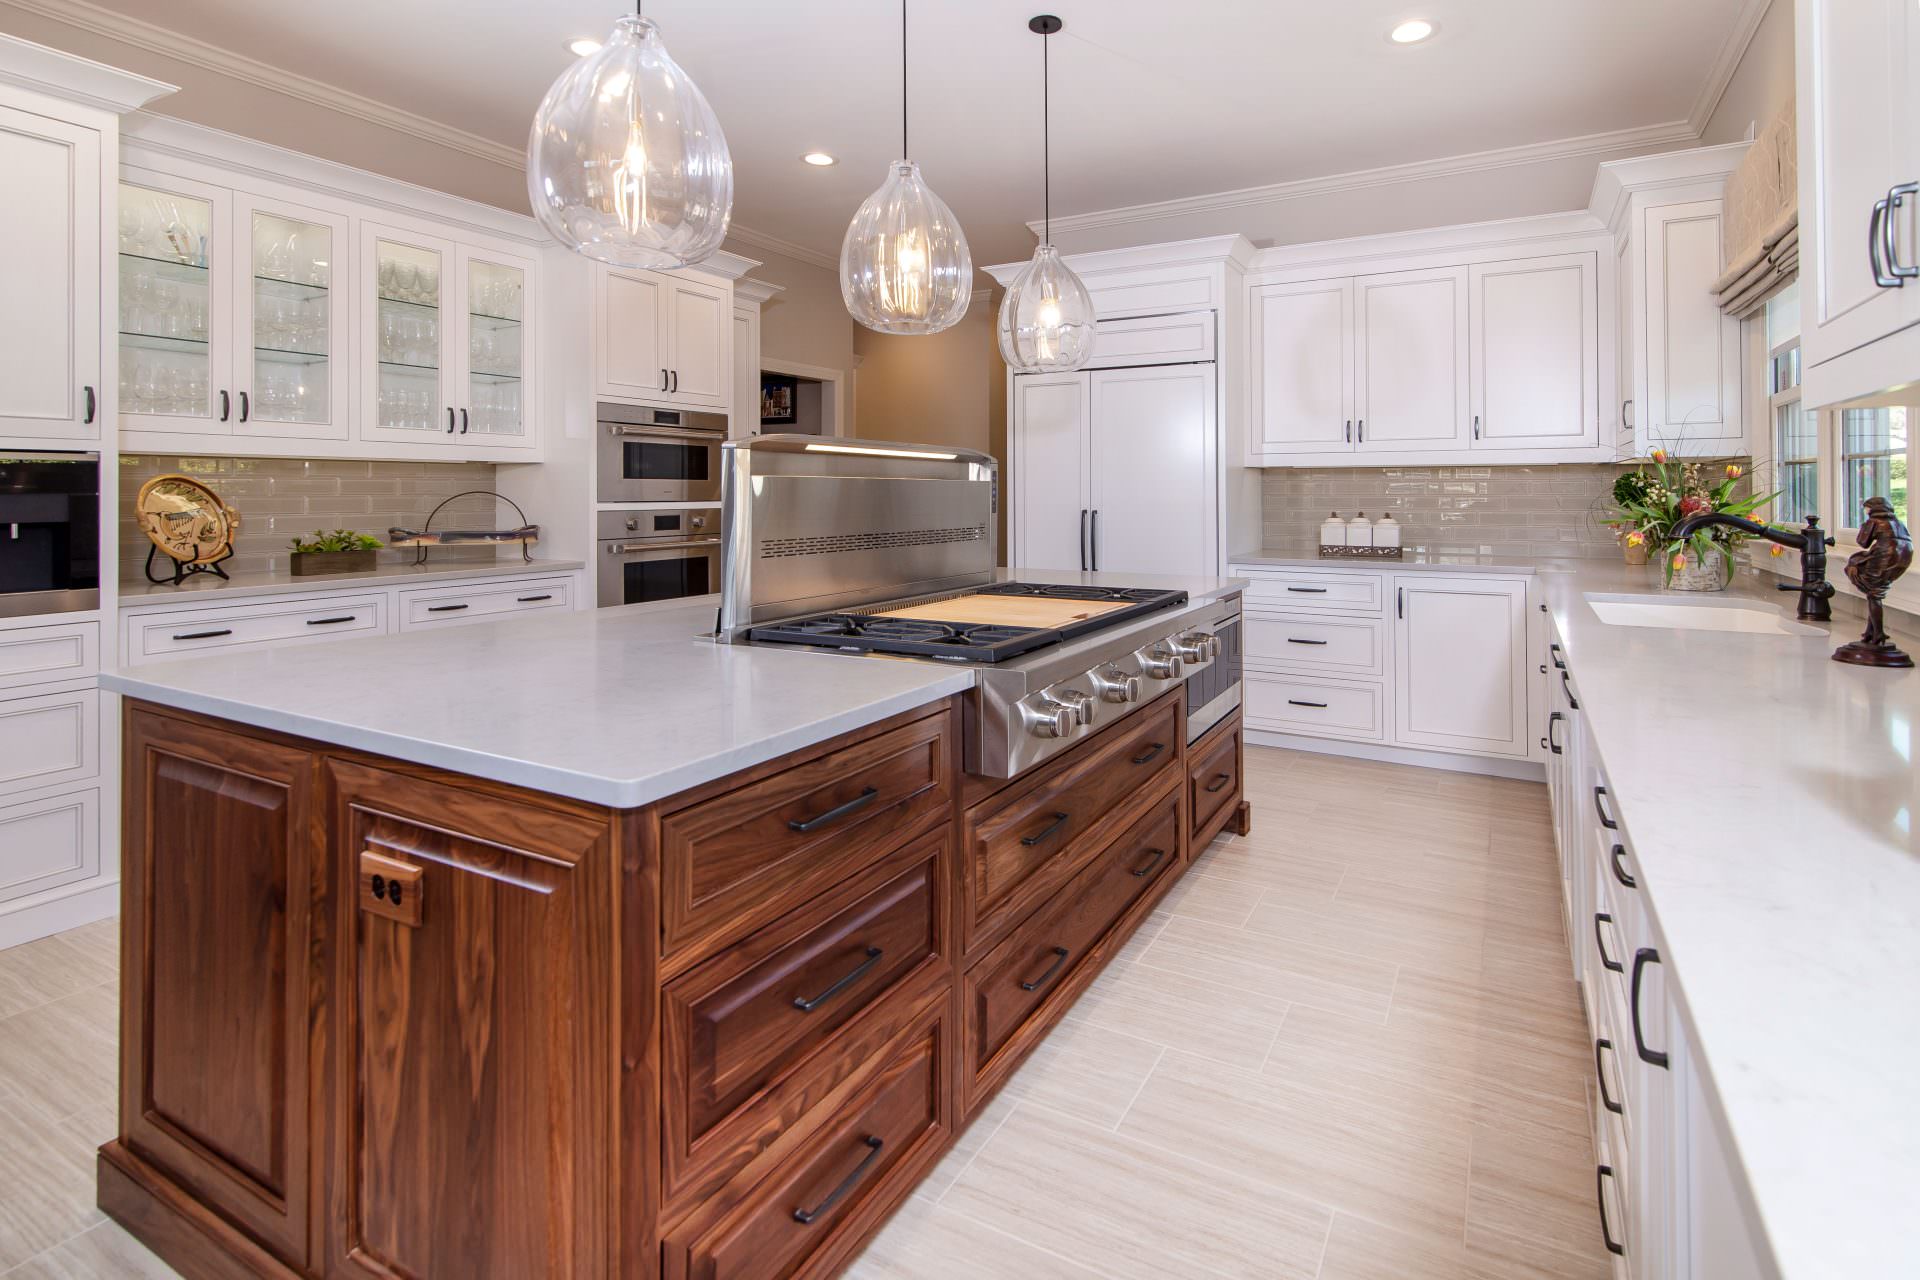 New White Kitchen Cabinets And White Quartz Countertops for Simple Design